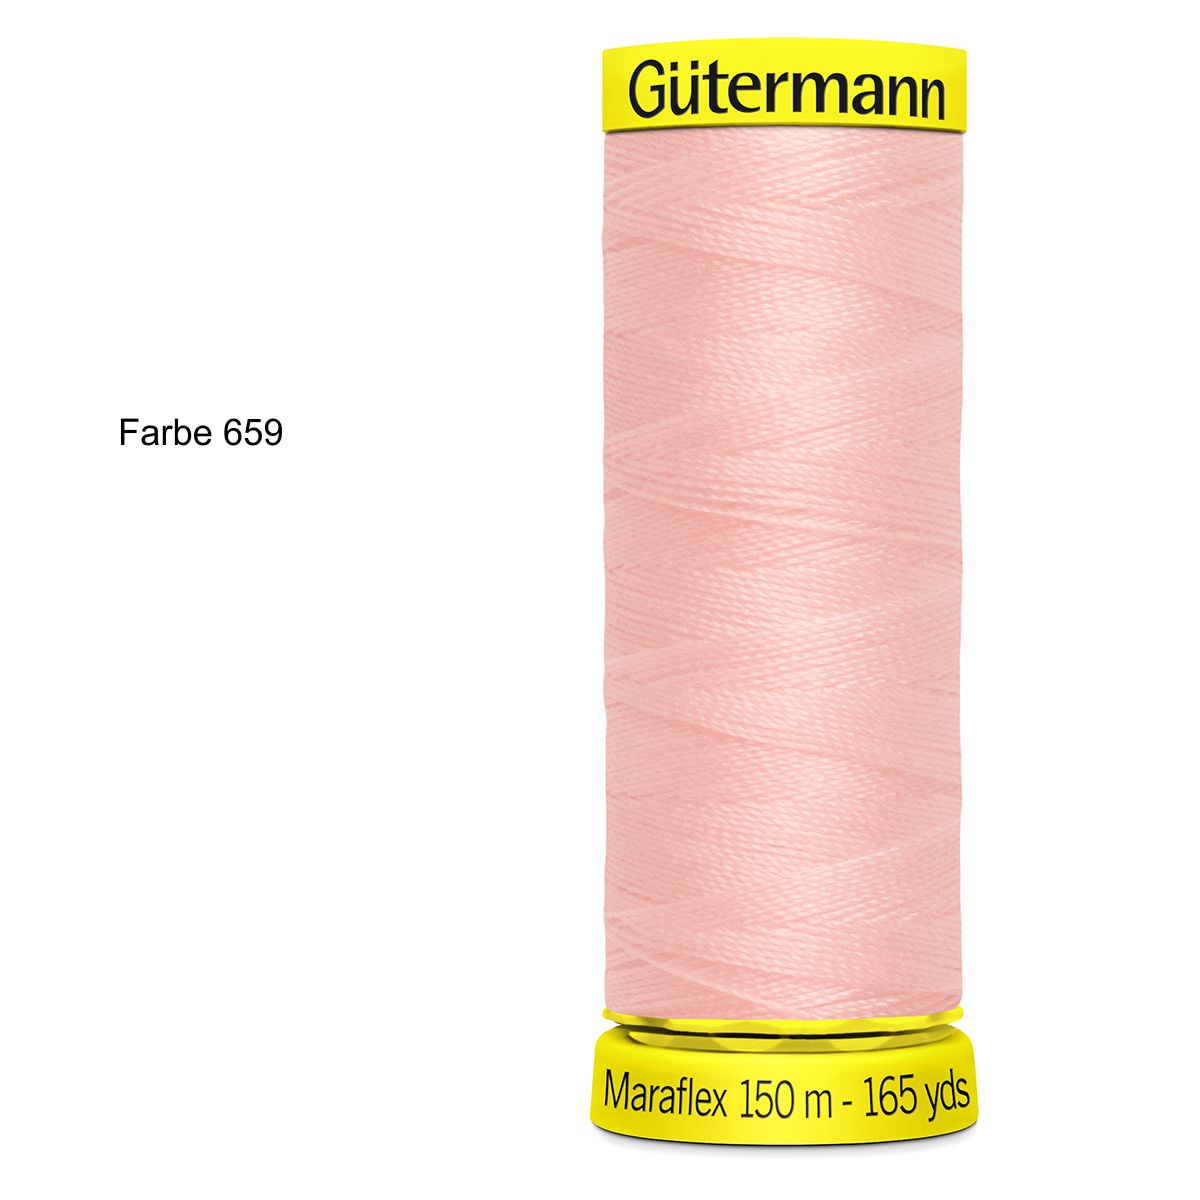 Gütermann Maraflex Elastic- Nähgarn 150m Farbe 659